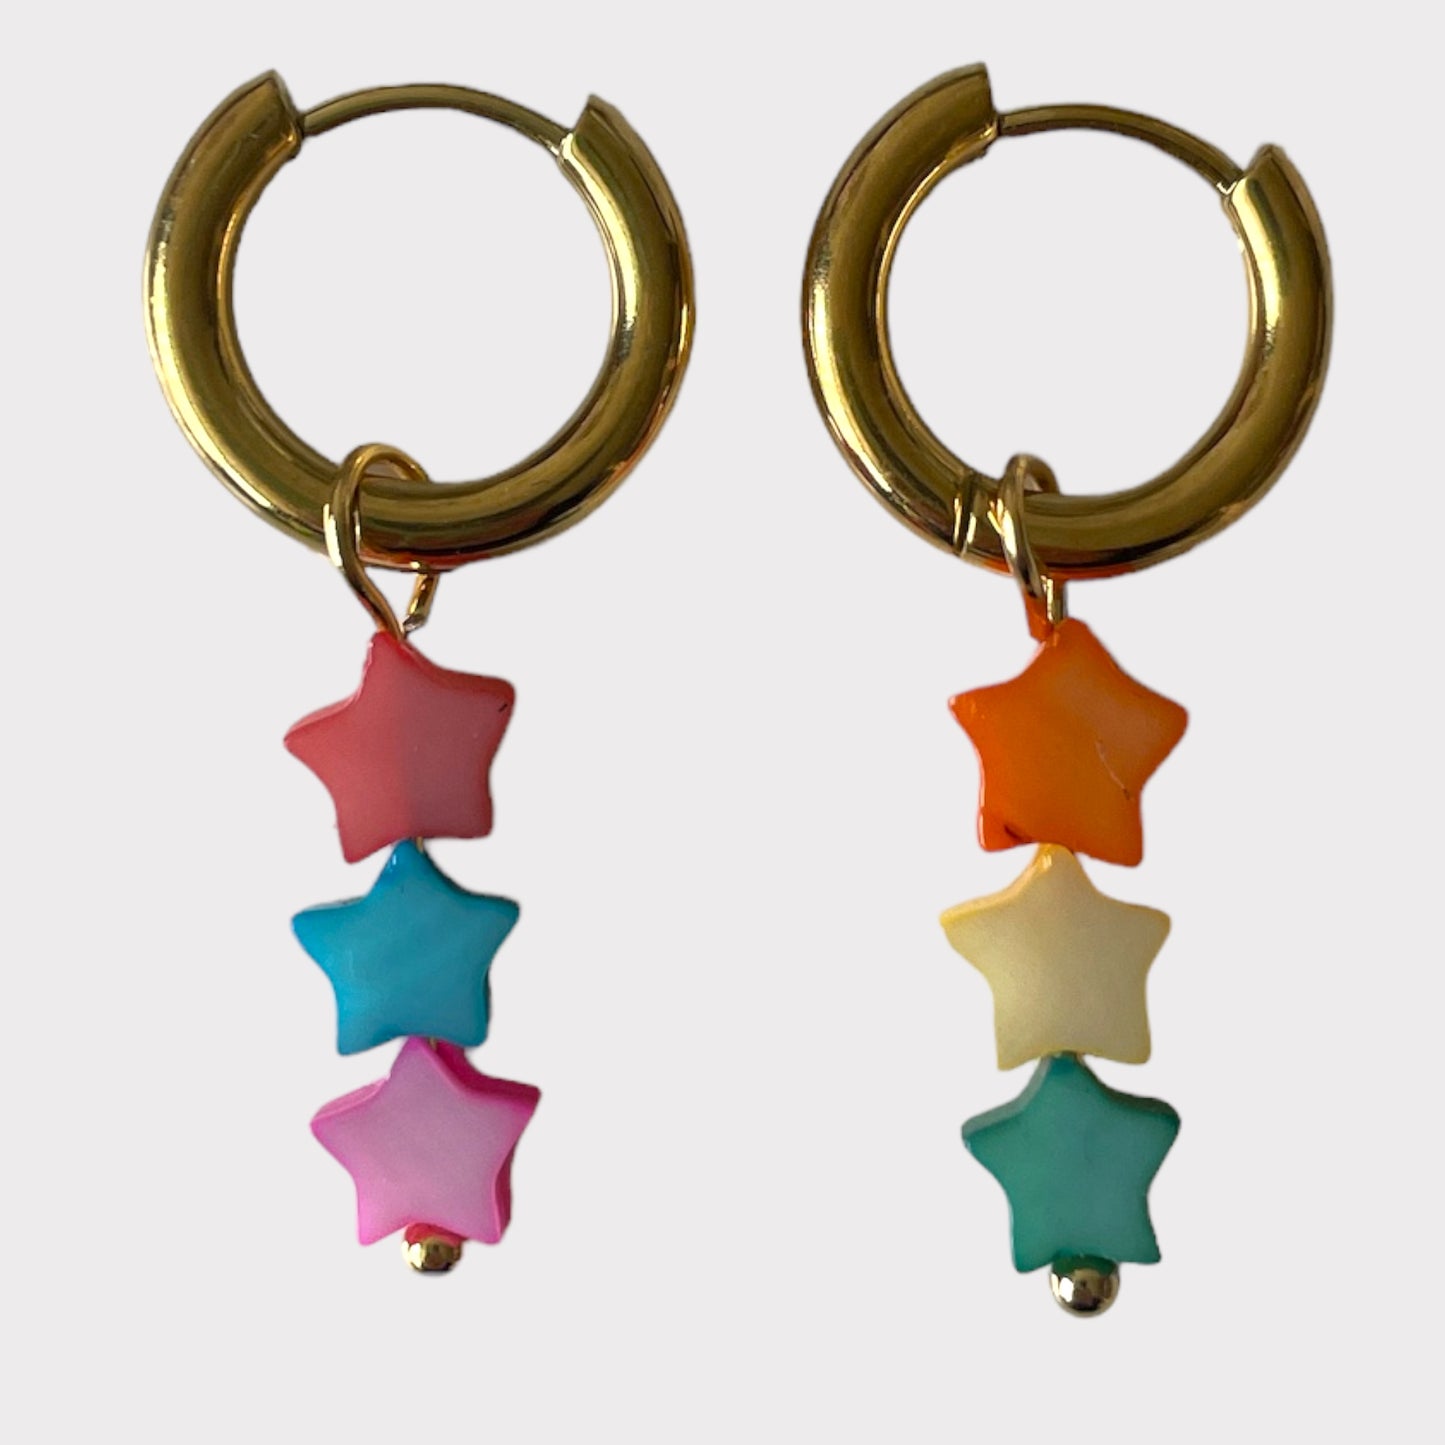 'TRIPLE COLOR STAR' earrings